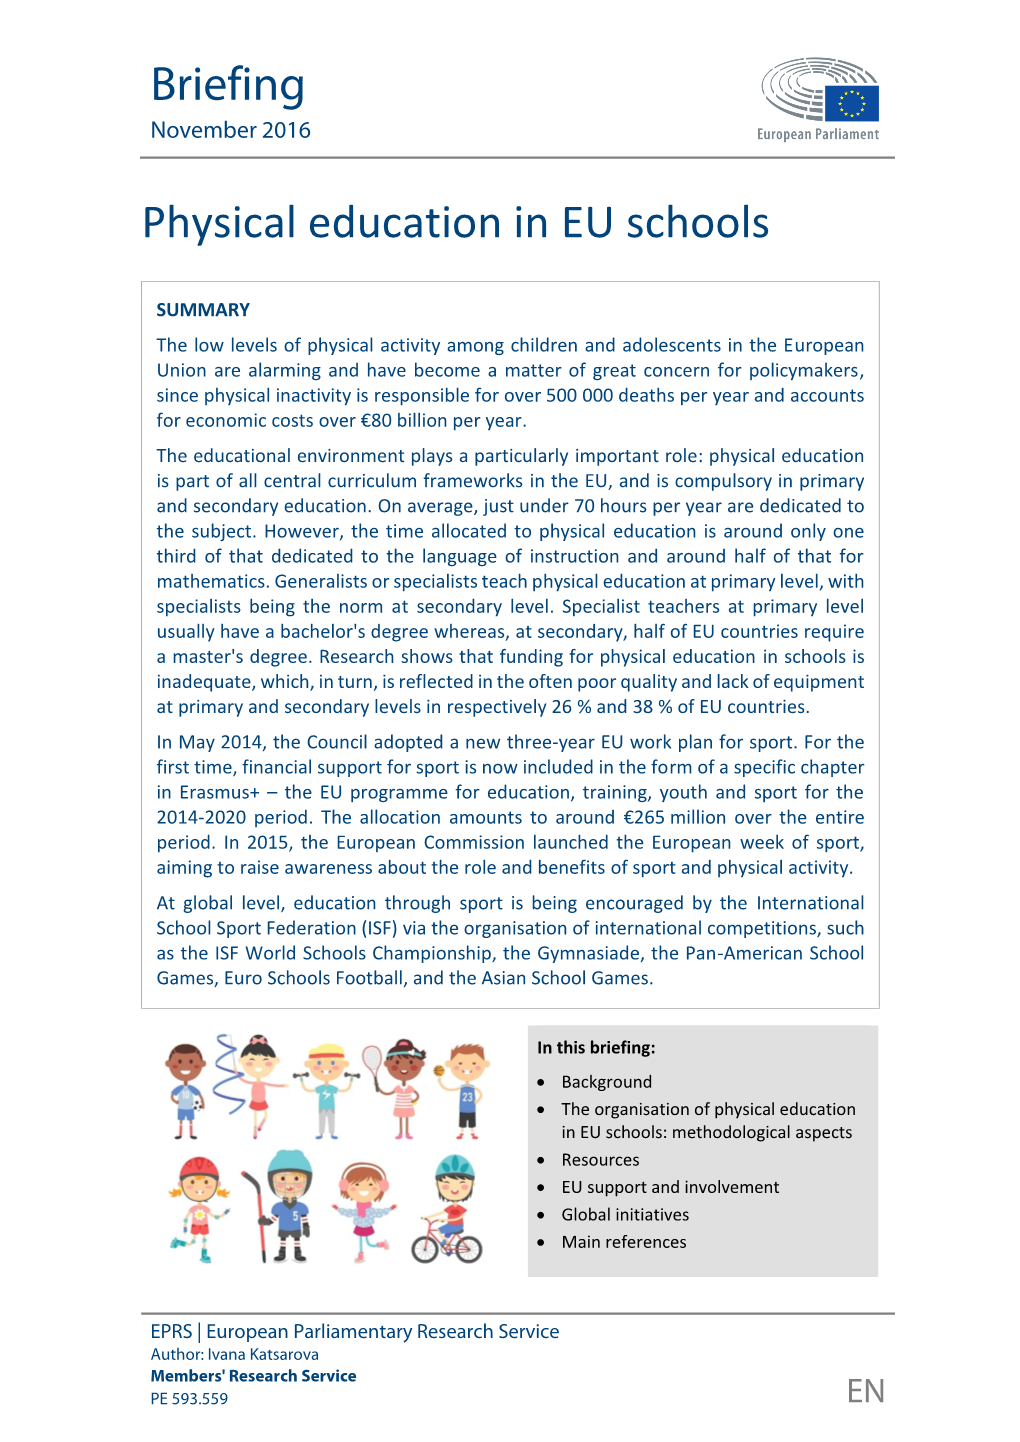 Physical Education in EU Schools